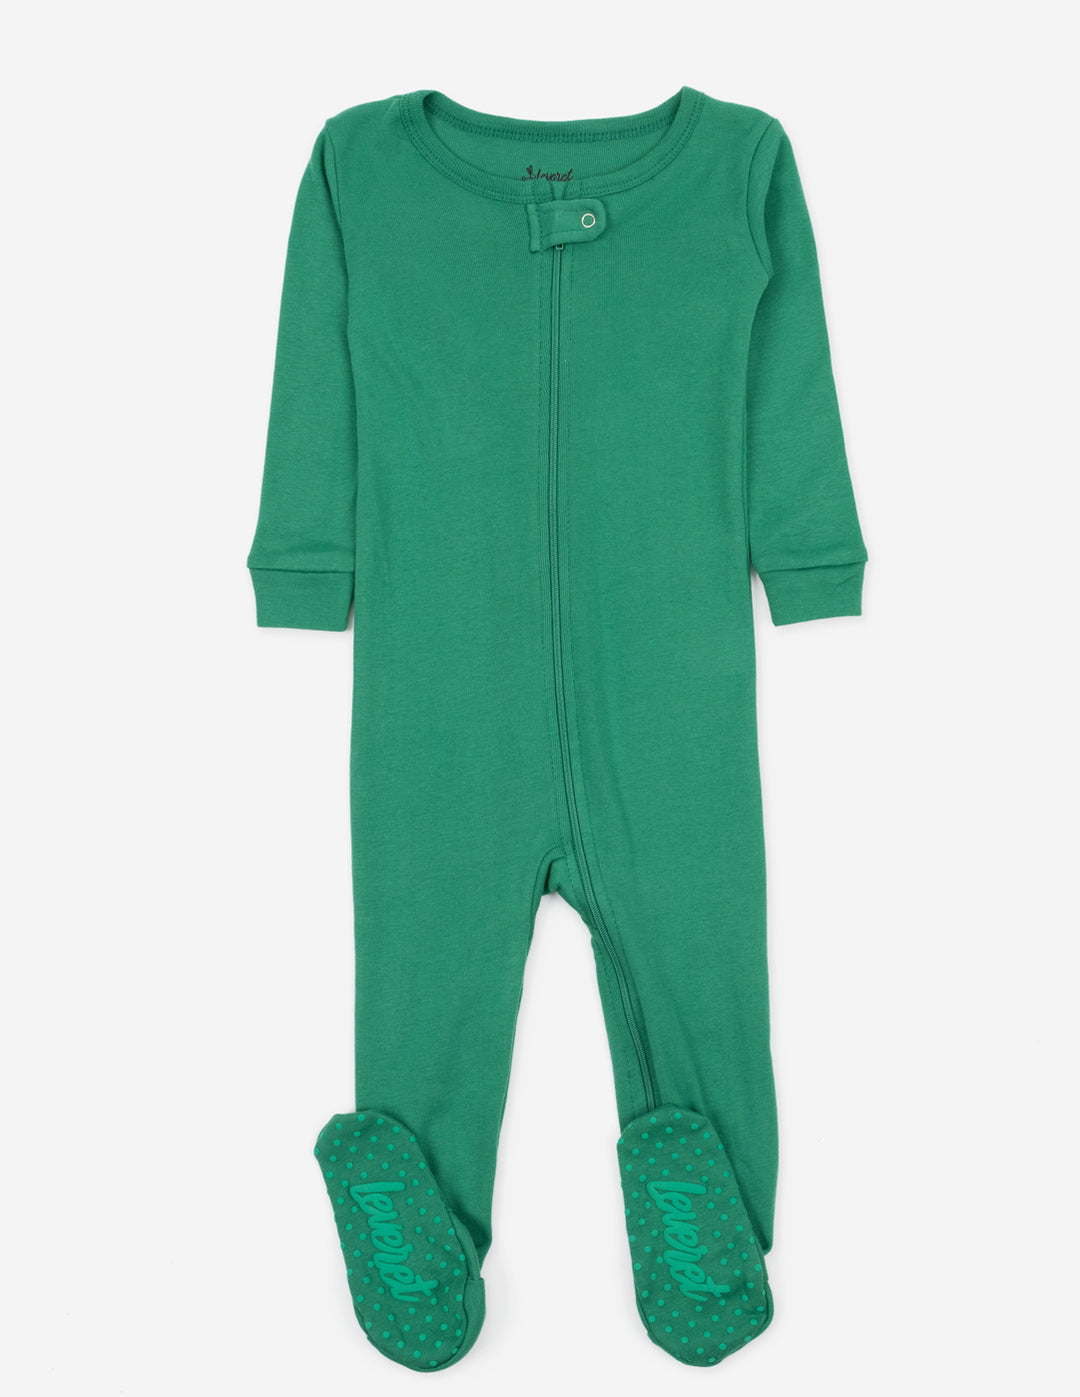 green baby footed pajama